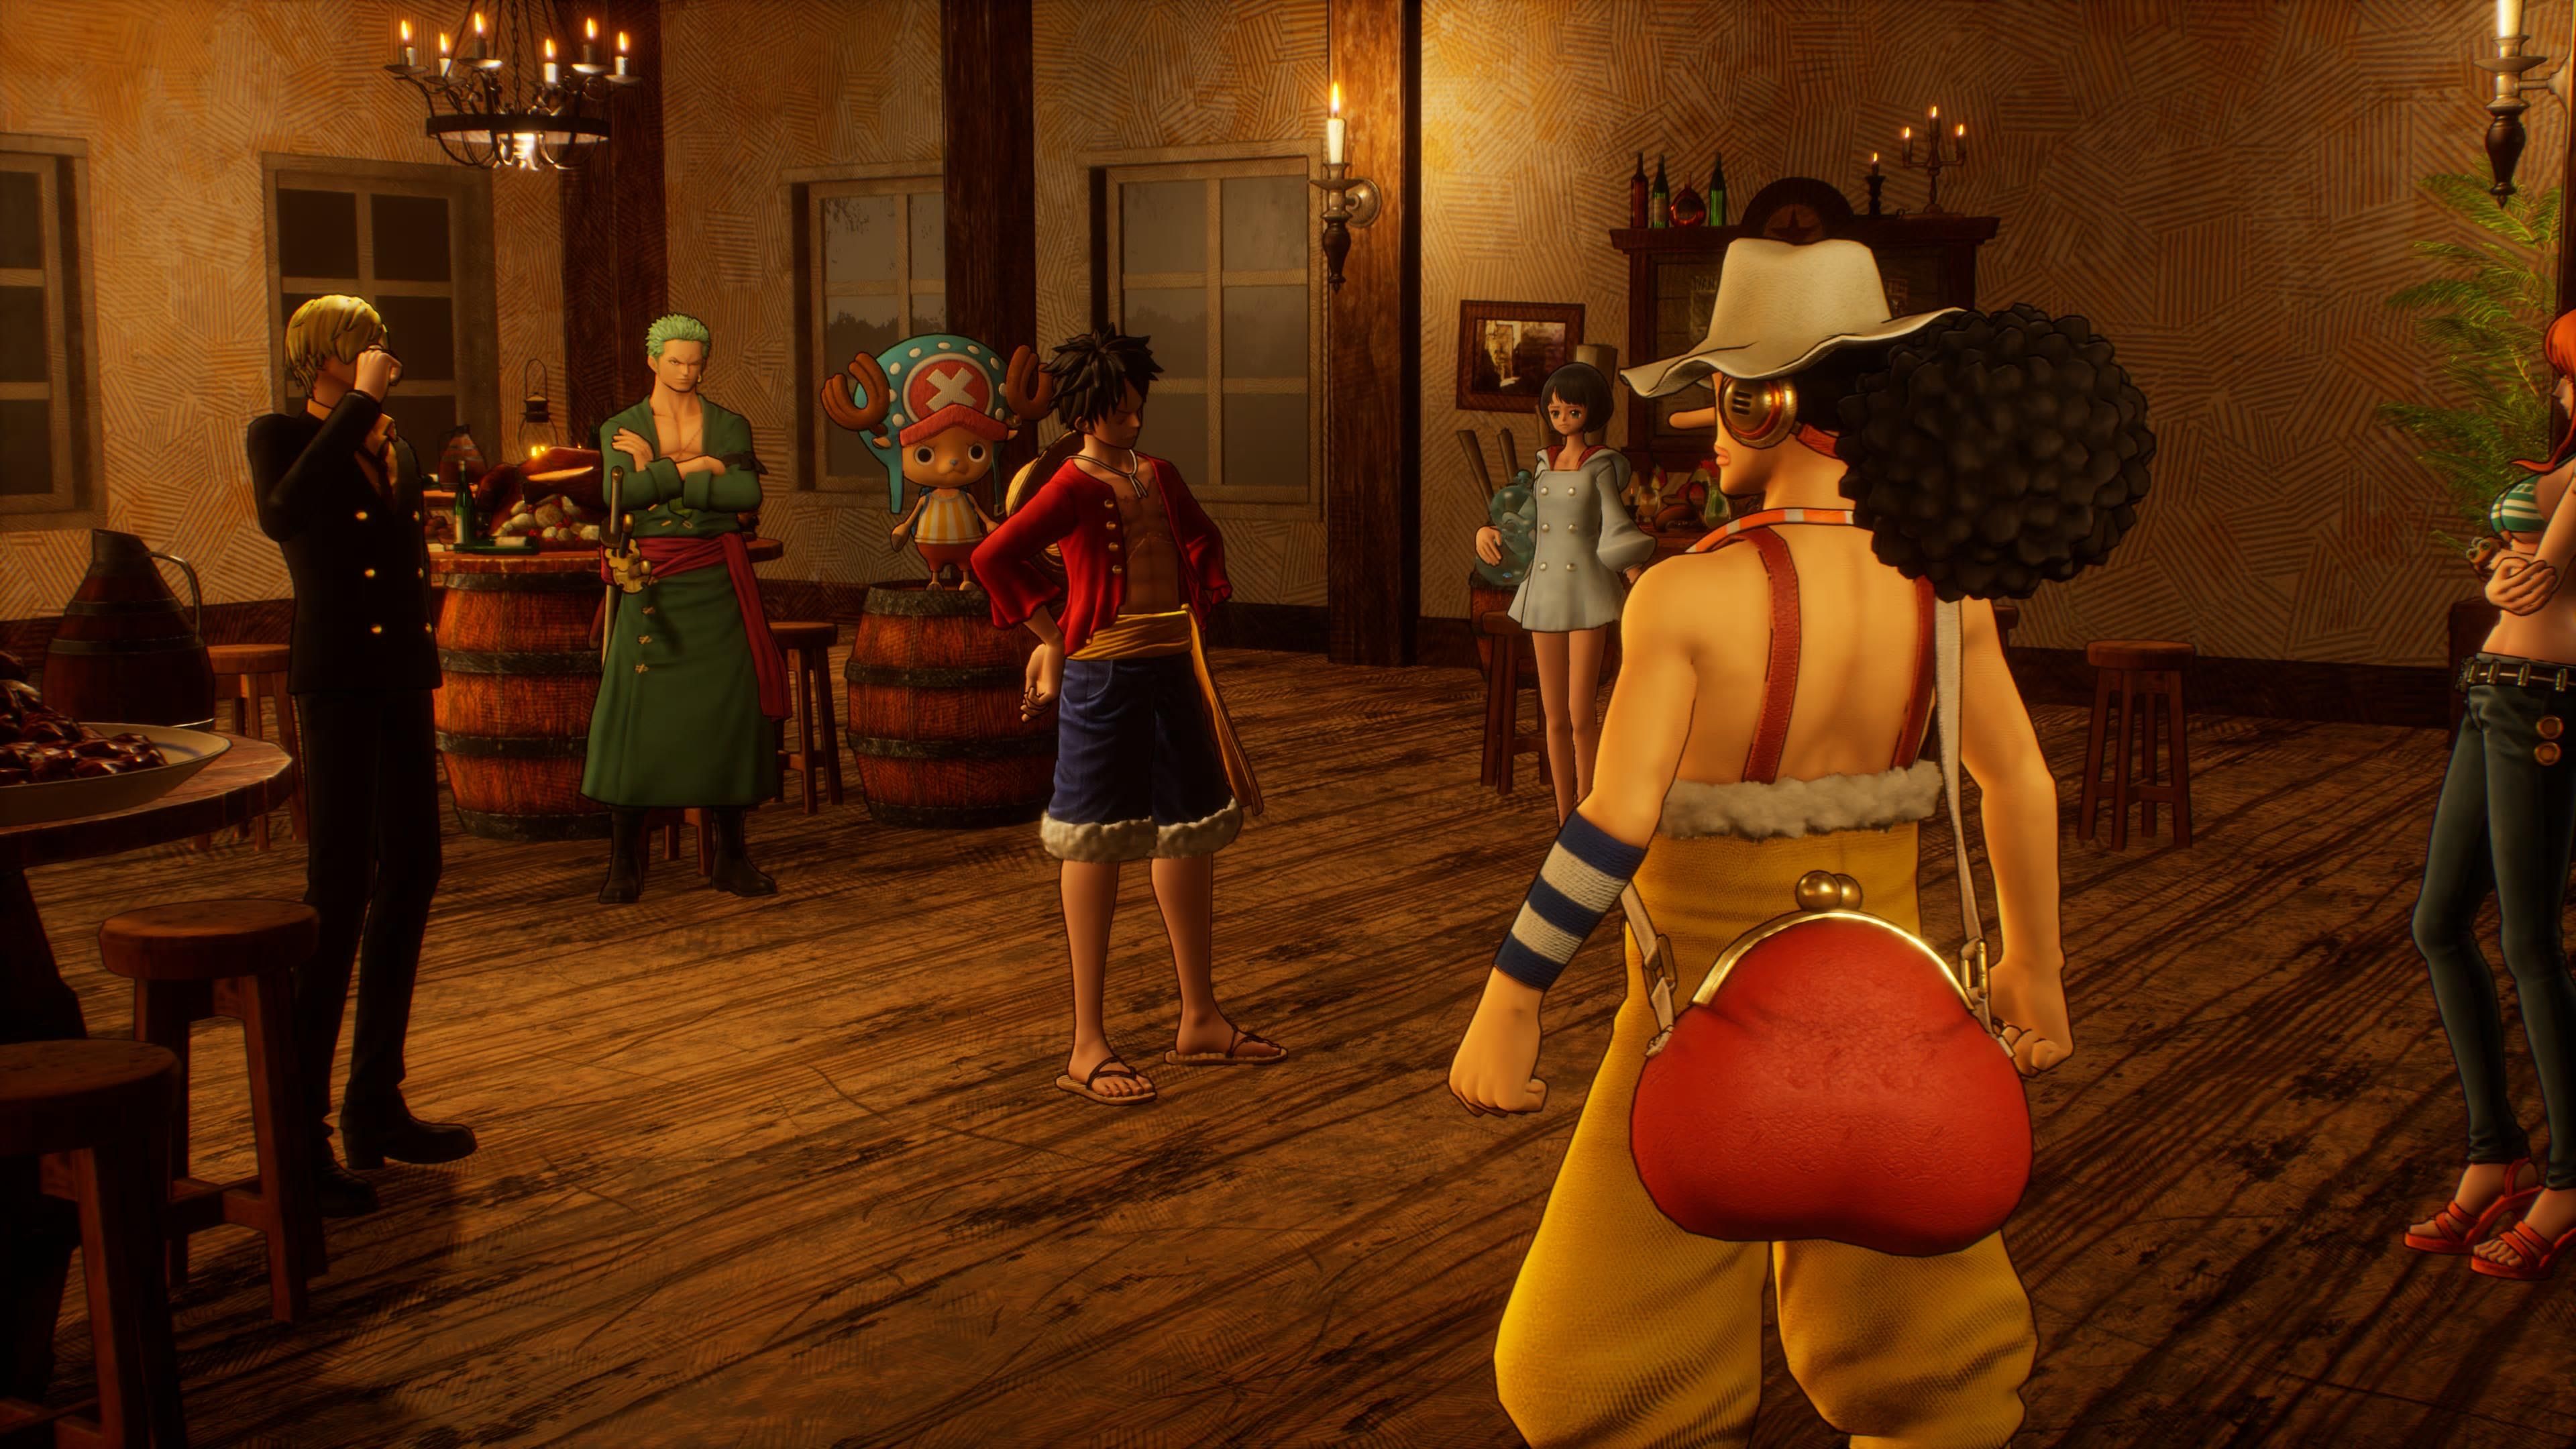 One Piece crew standing around in a bar